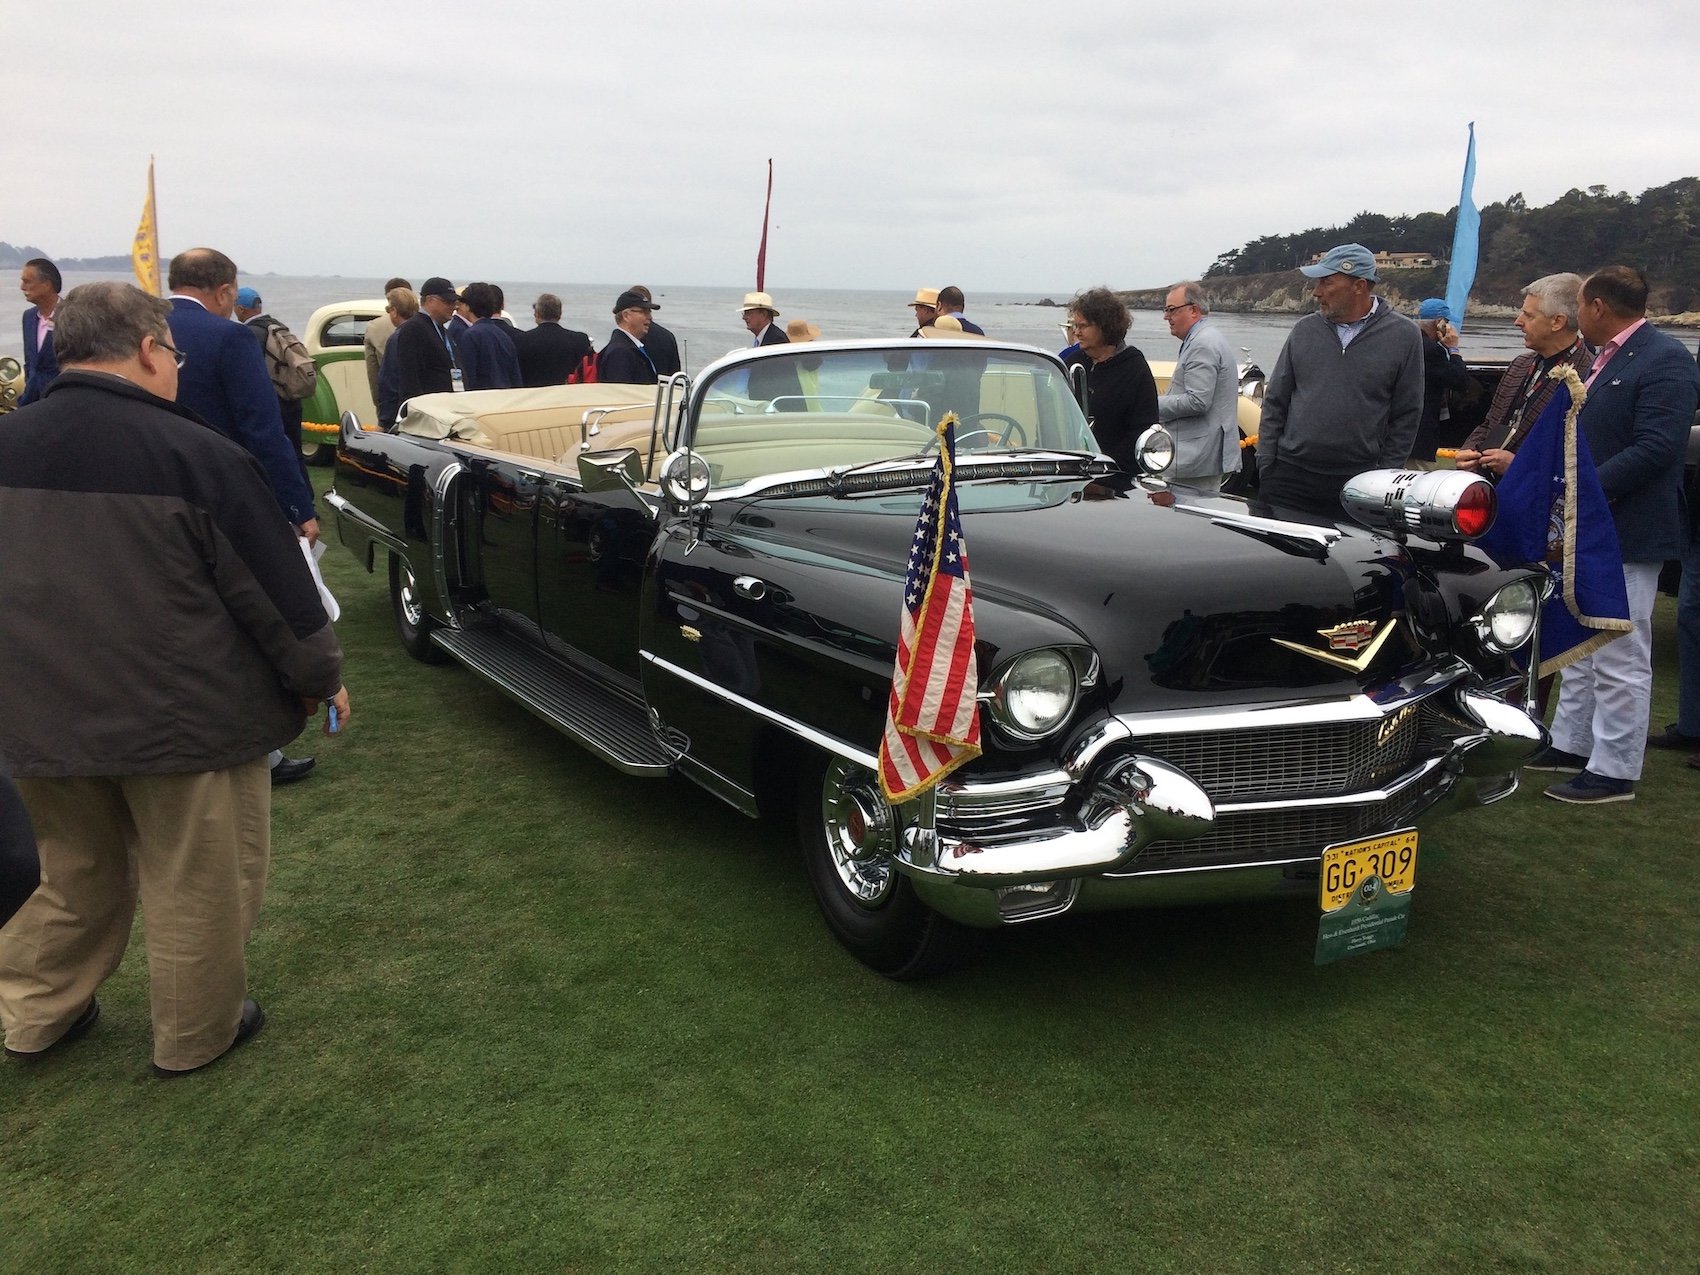 1956 Cadillac Presidential Parade Car